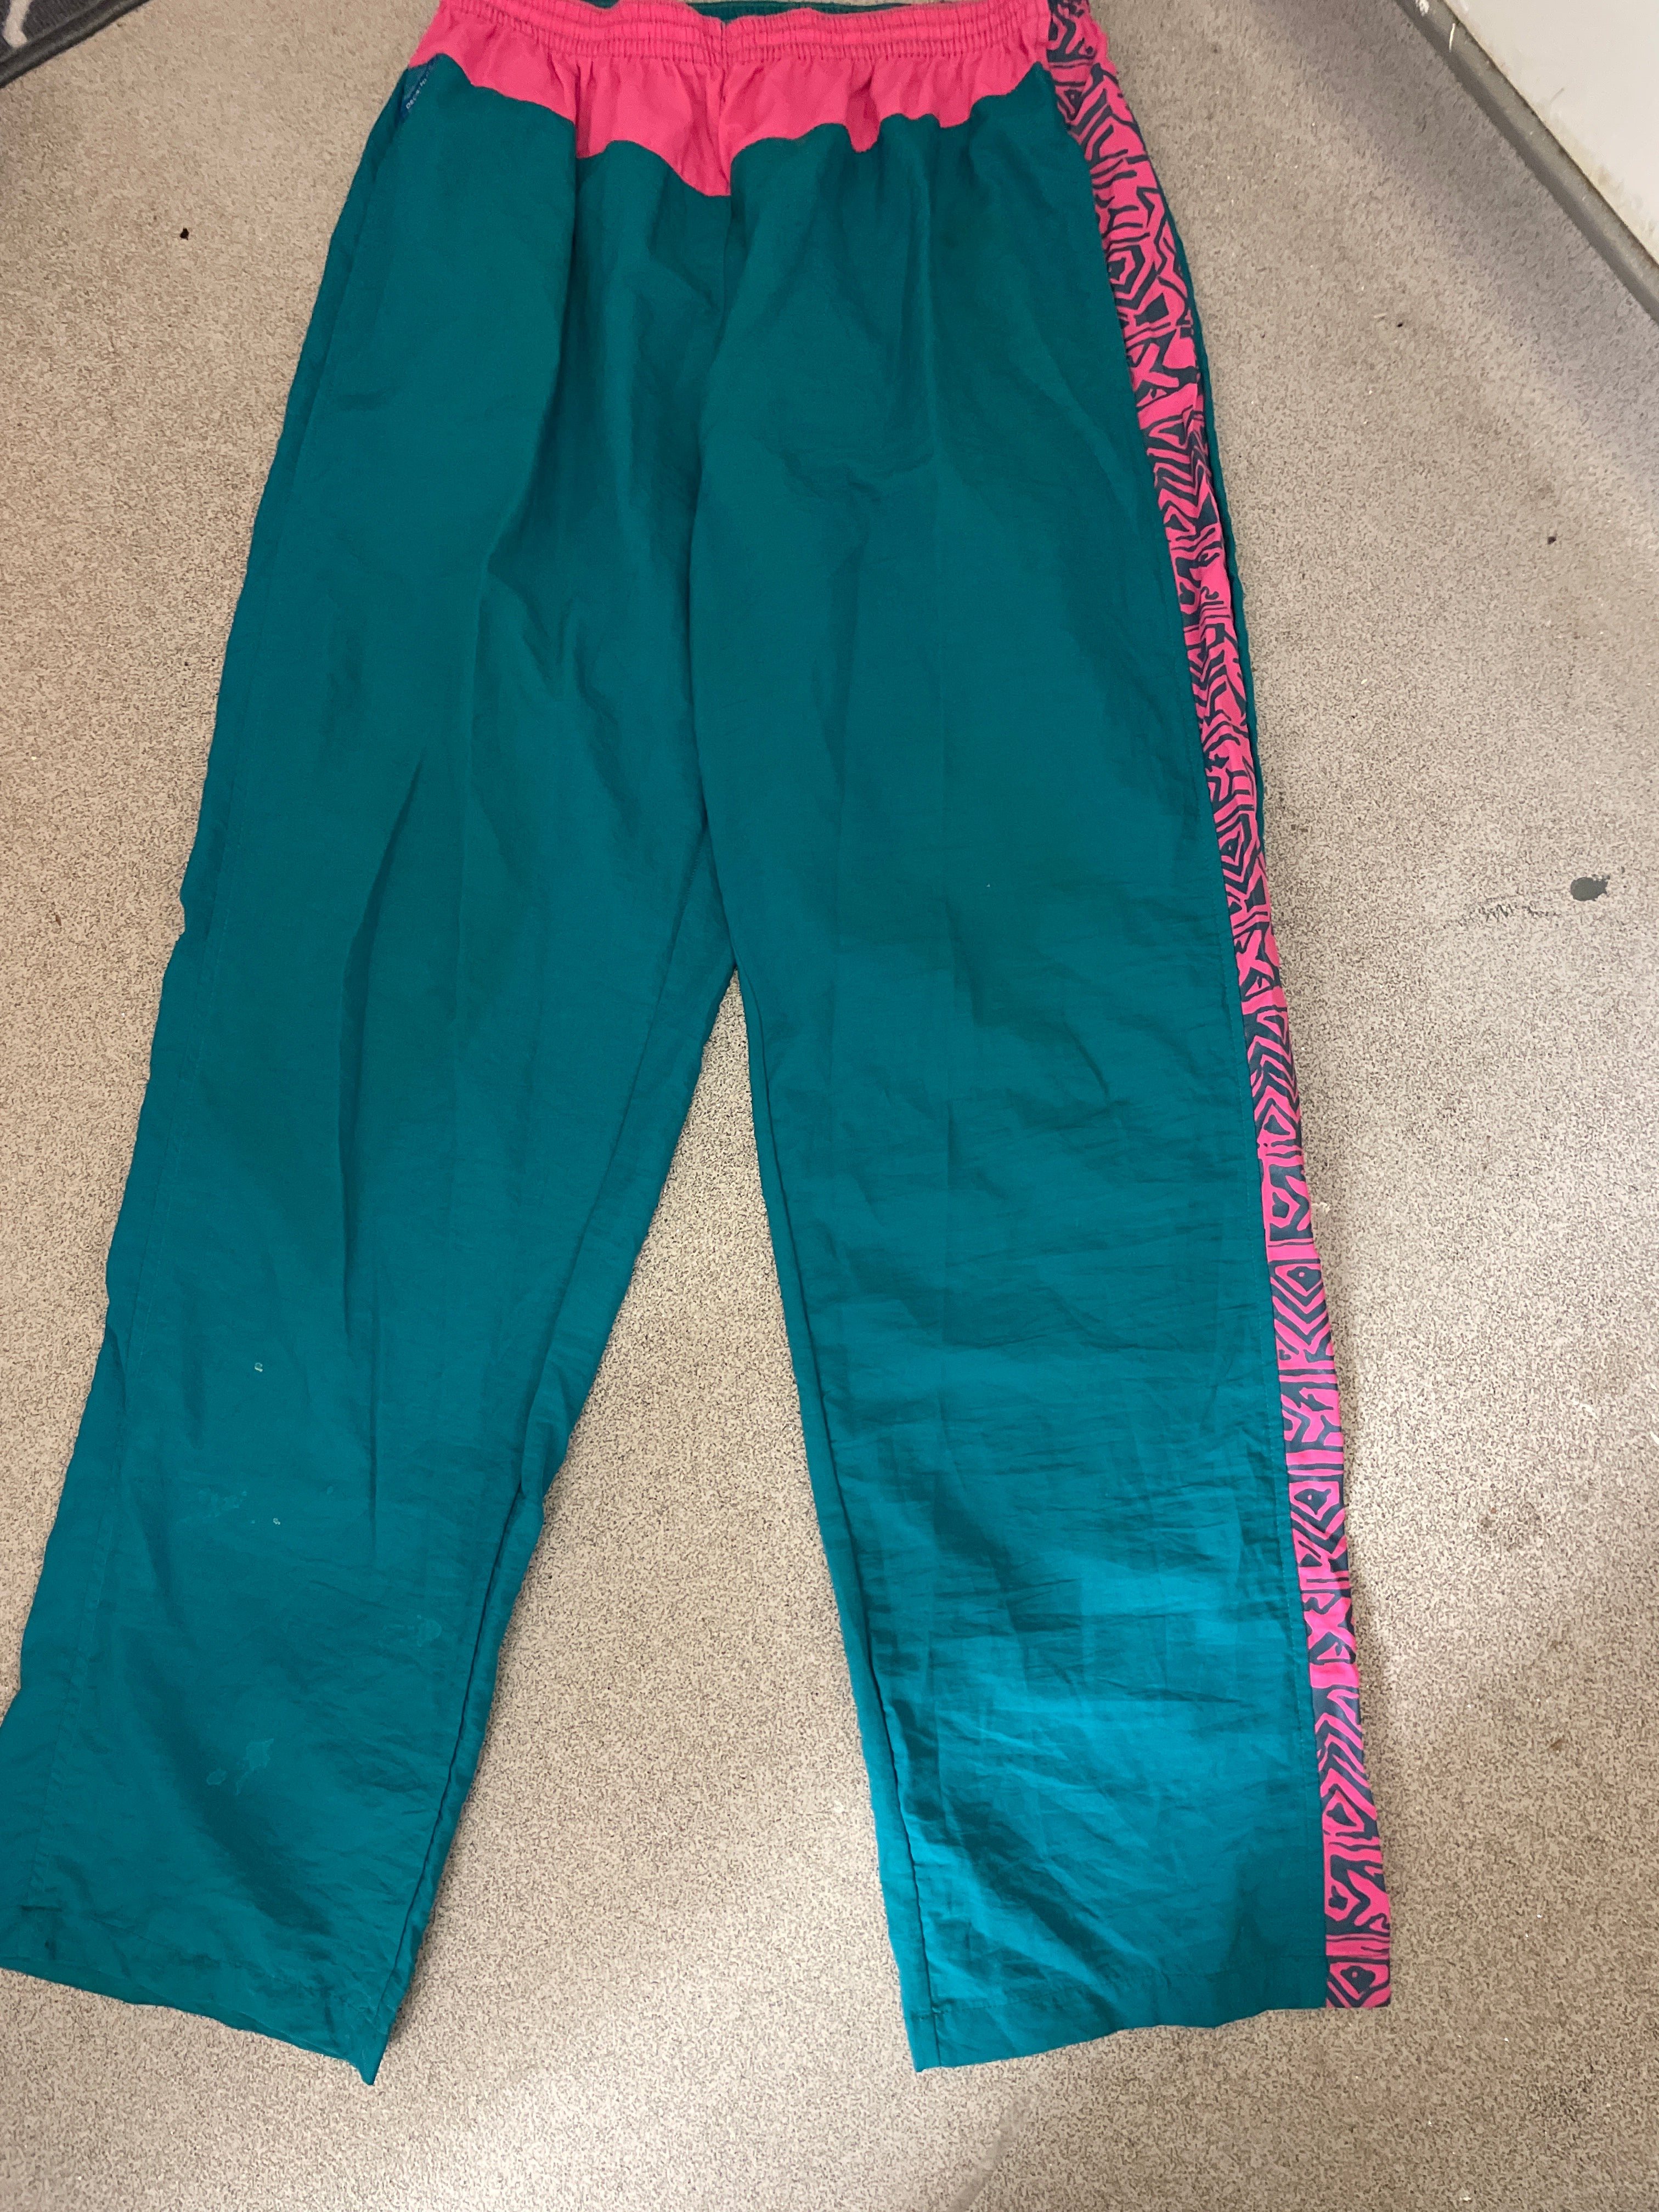 Vintage green decathlon track pant size M